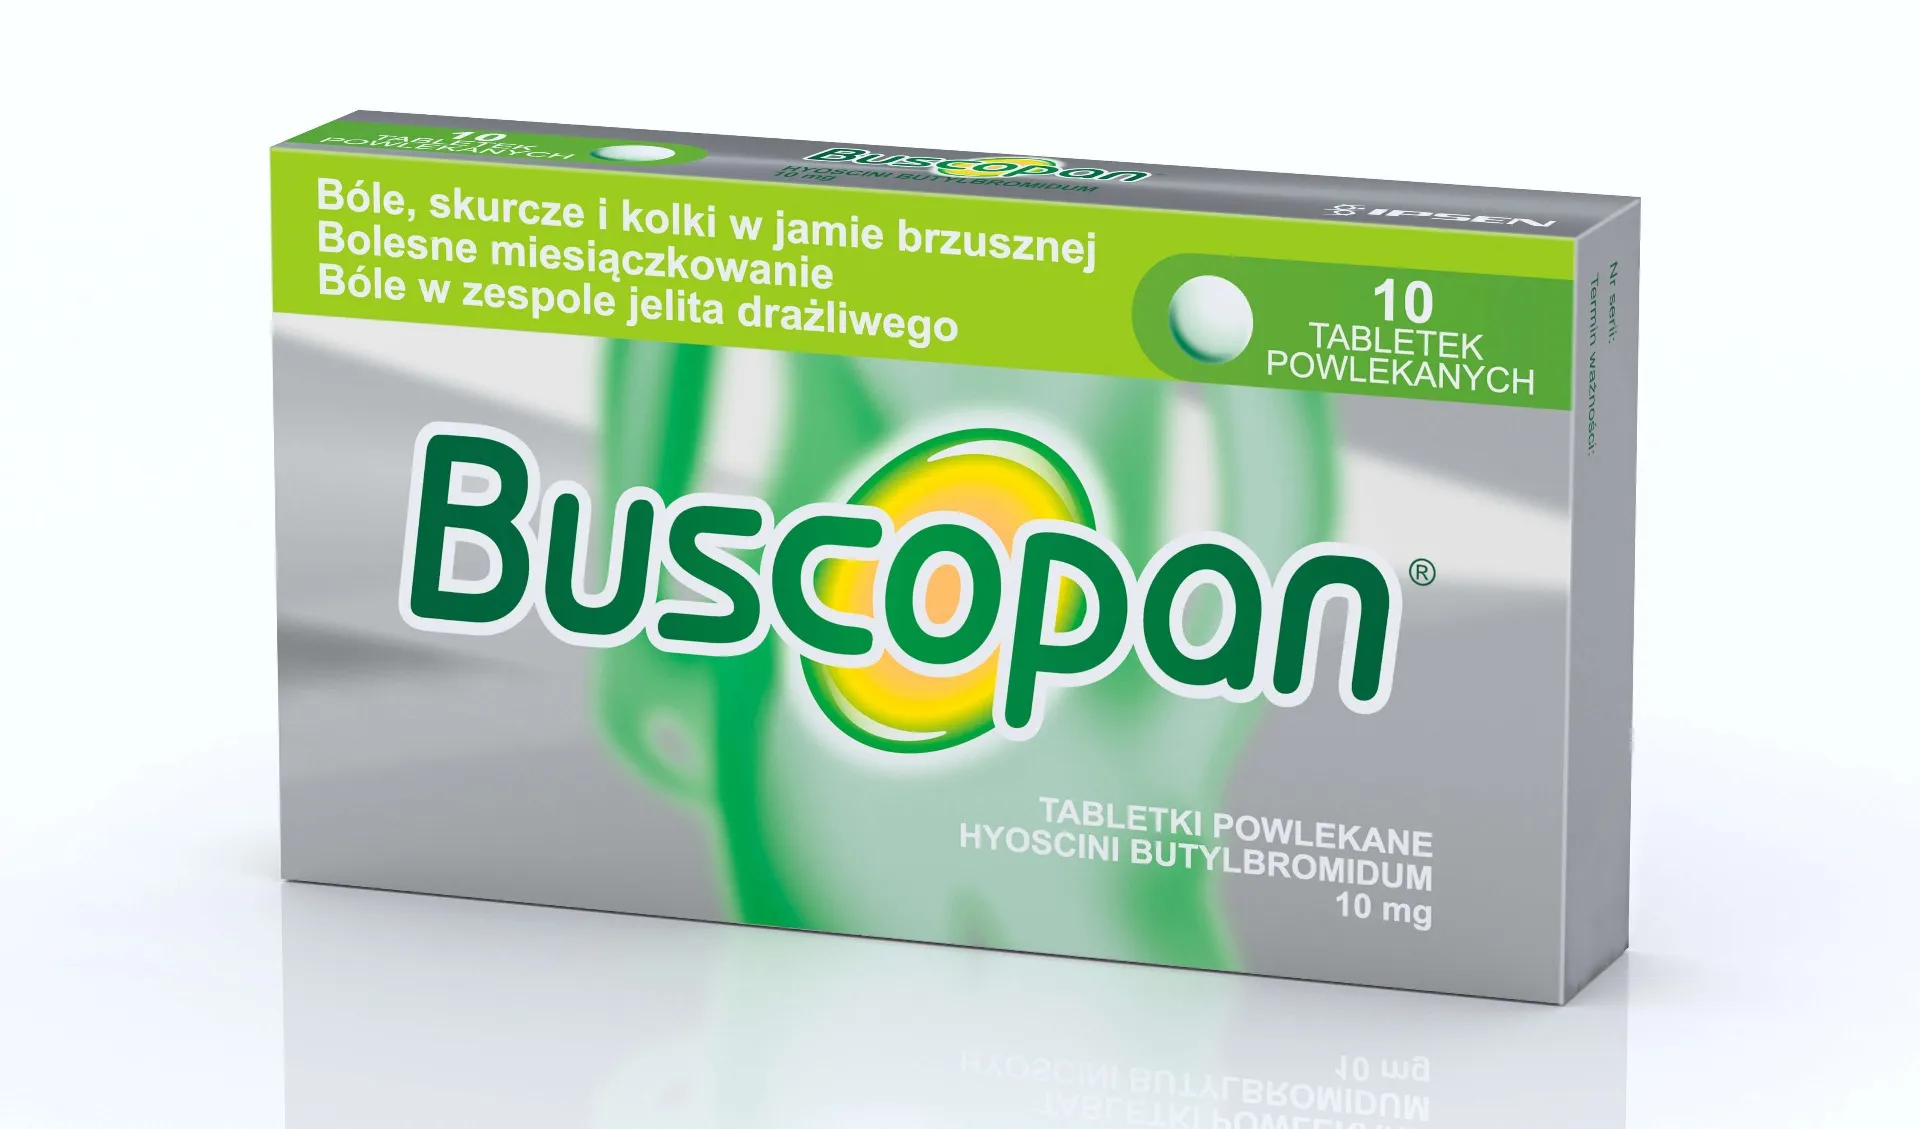 Buscopan, 10 mg, 10 tabletek powlekanych. Data ważności 2022-05-31